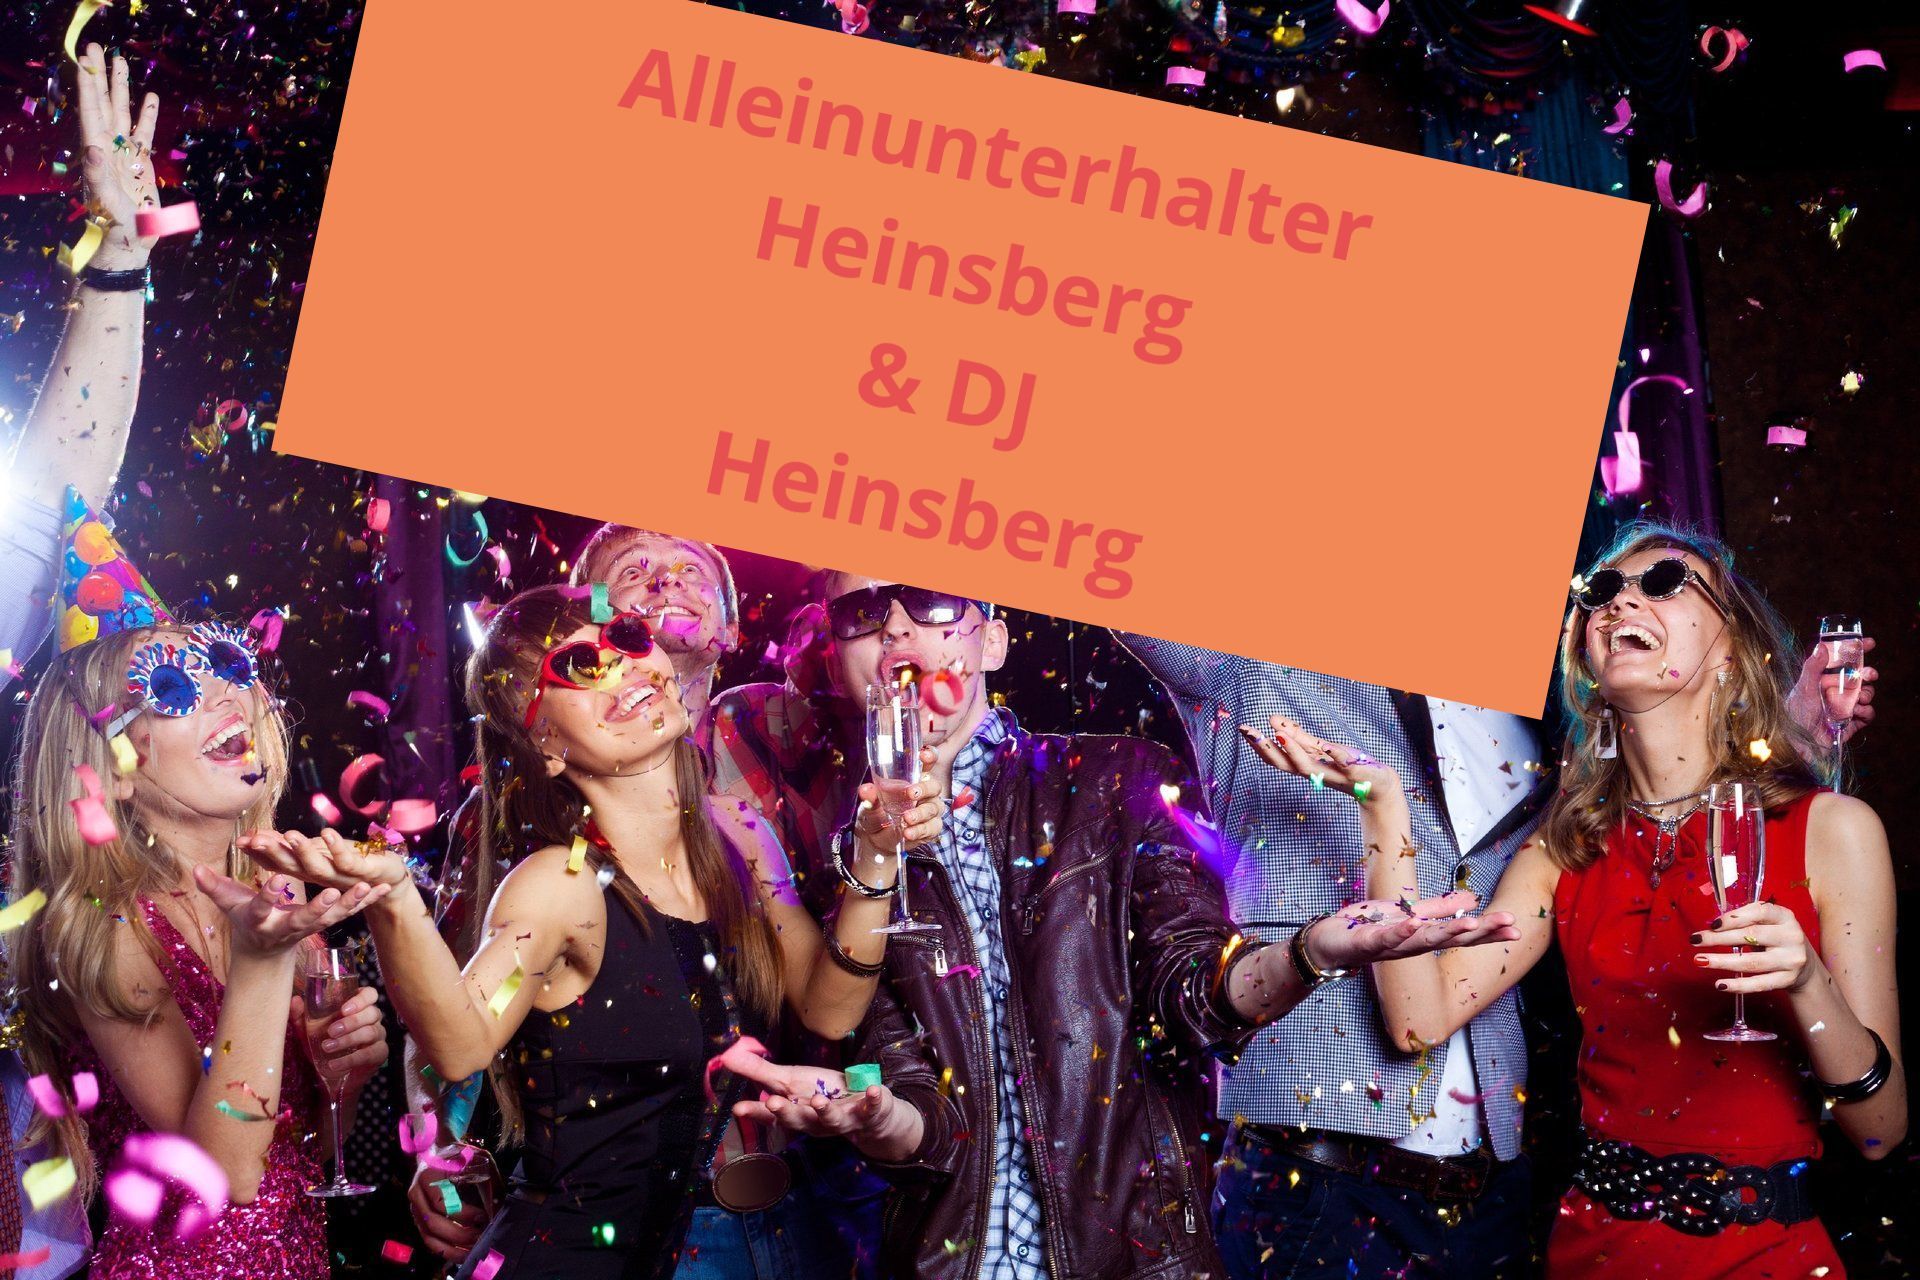 Alleinunterhalter Heinsberg & top DJ Heinsberg